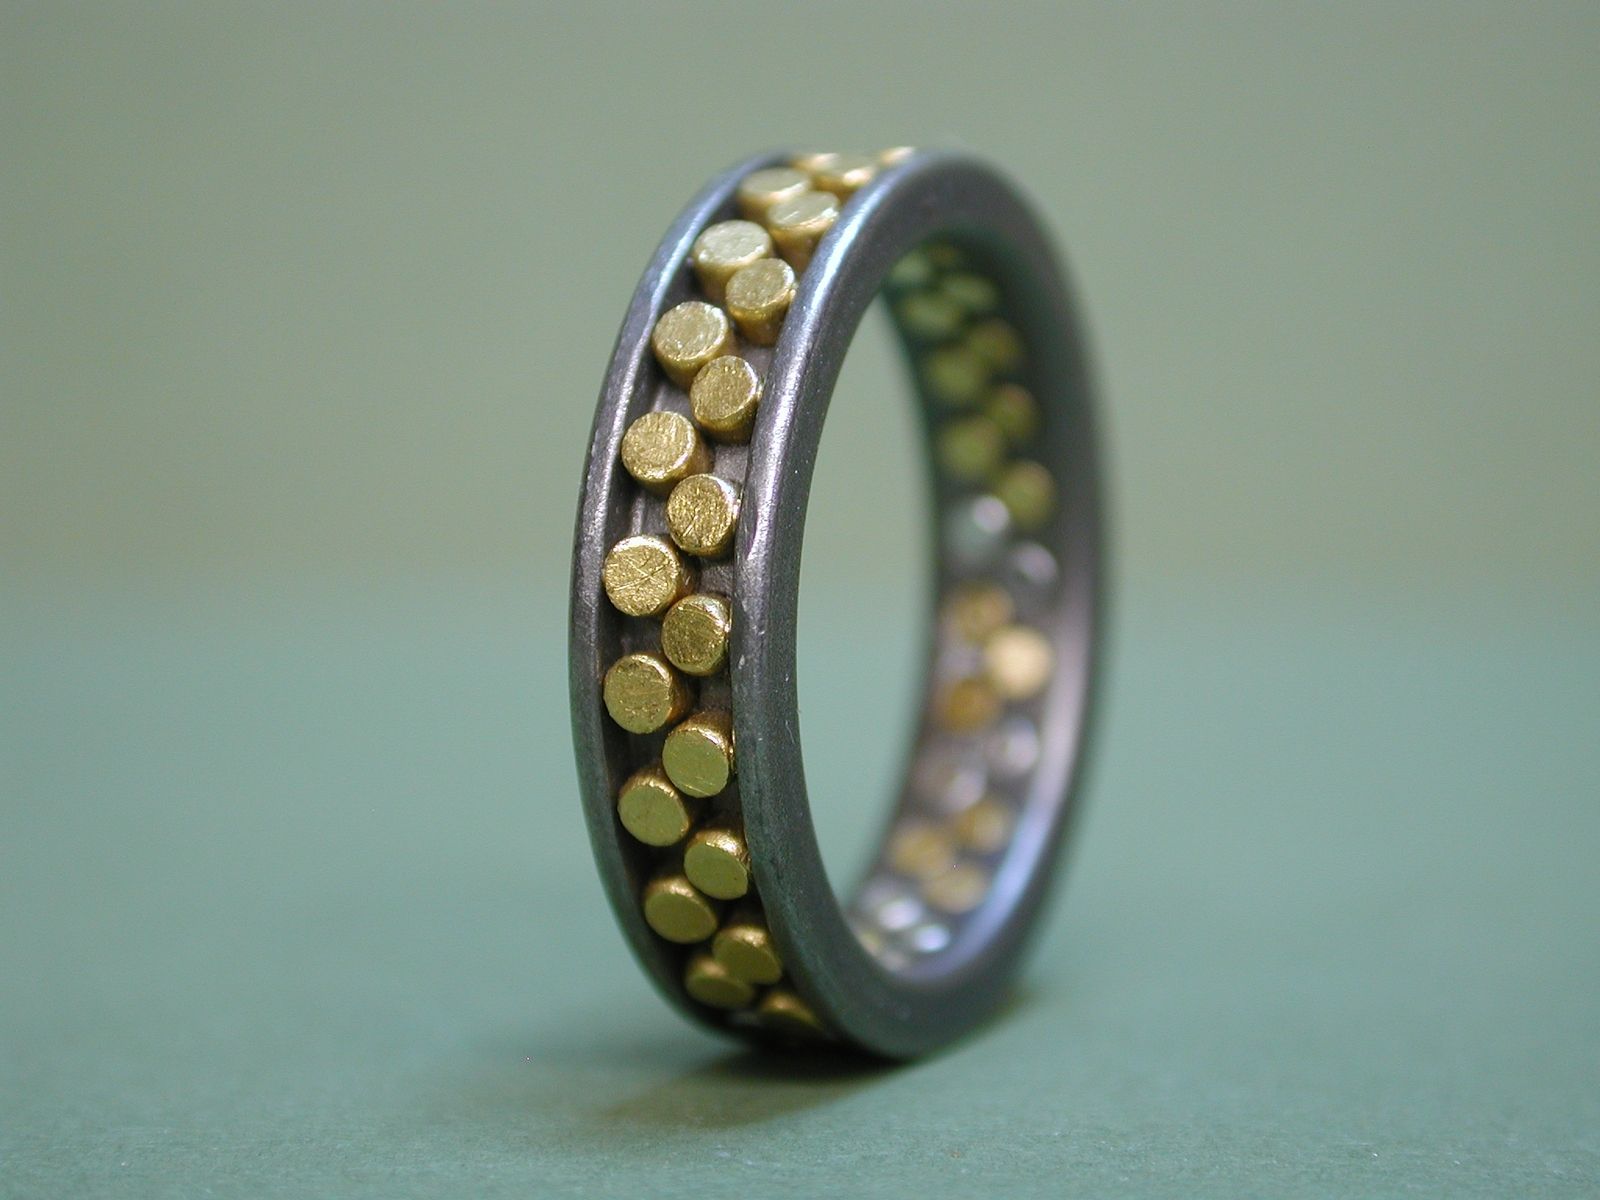 hand made titanium wedding rings